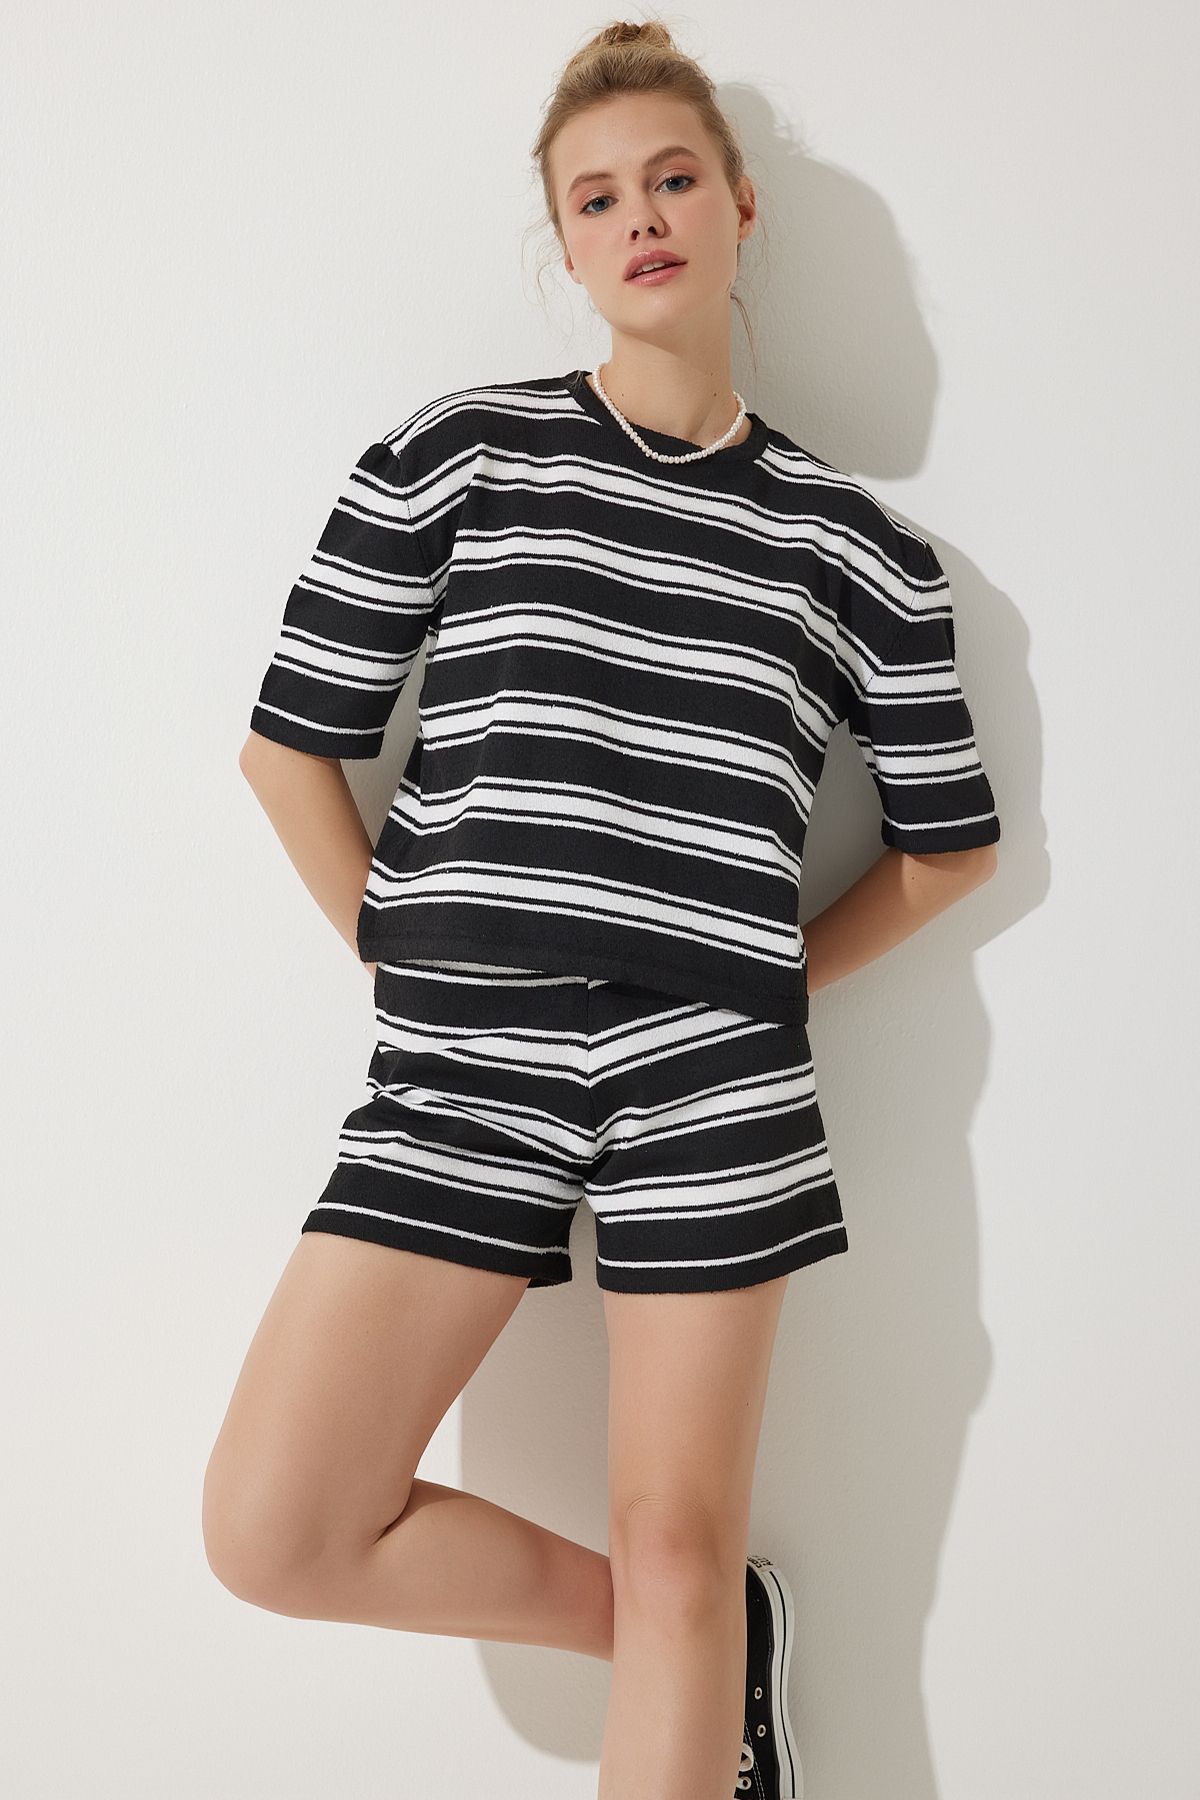 Happiness İstanbul Women's Black Striped Towel T-shirt Shorts Set